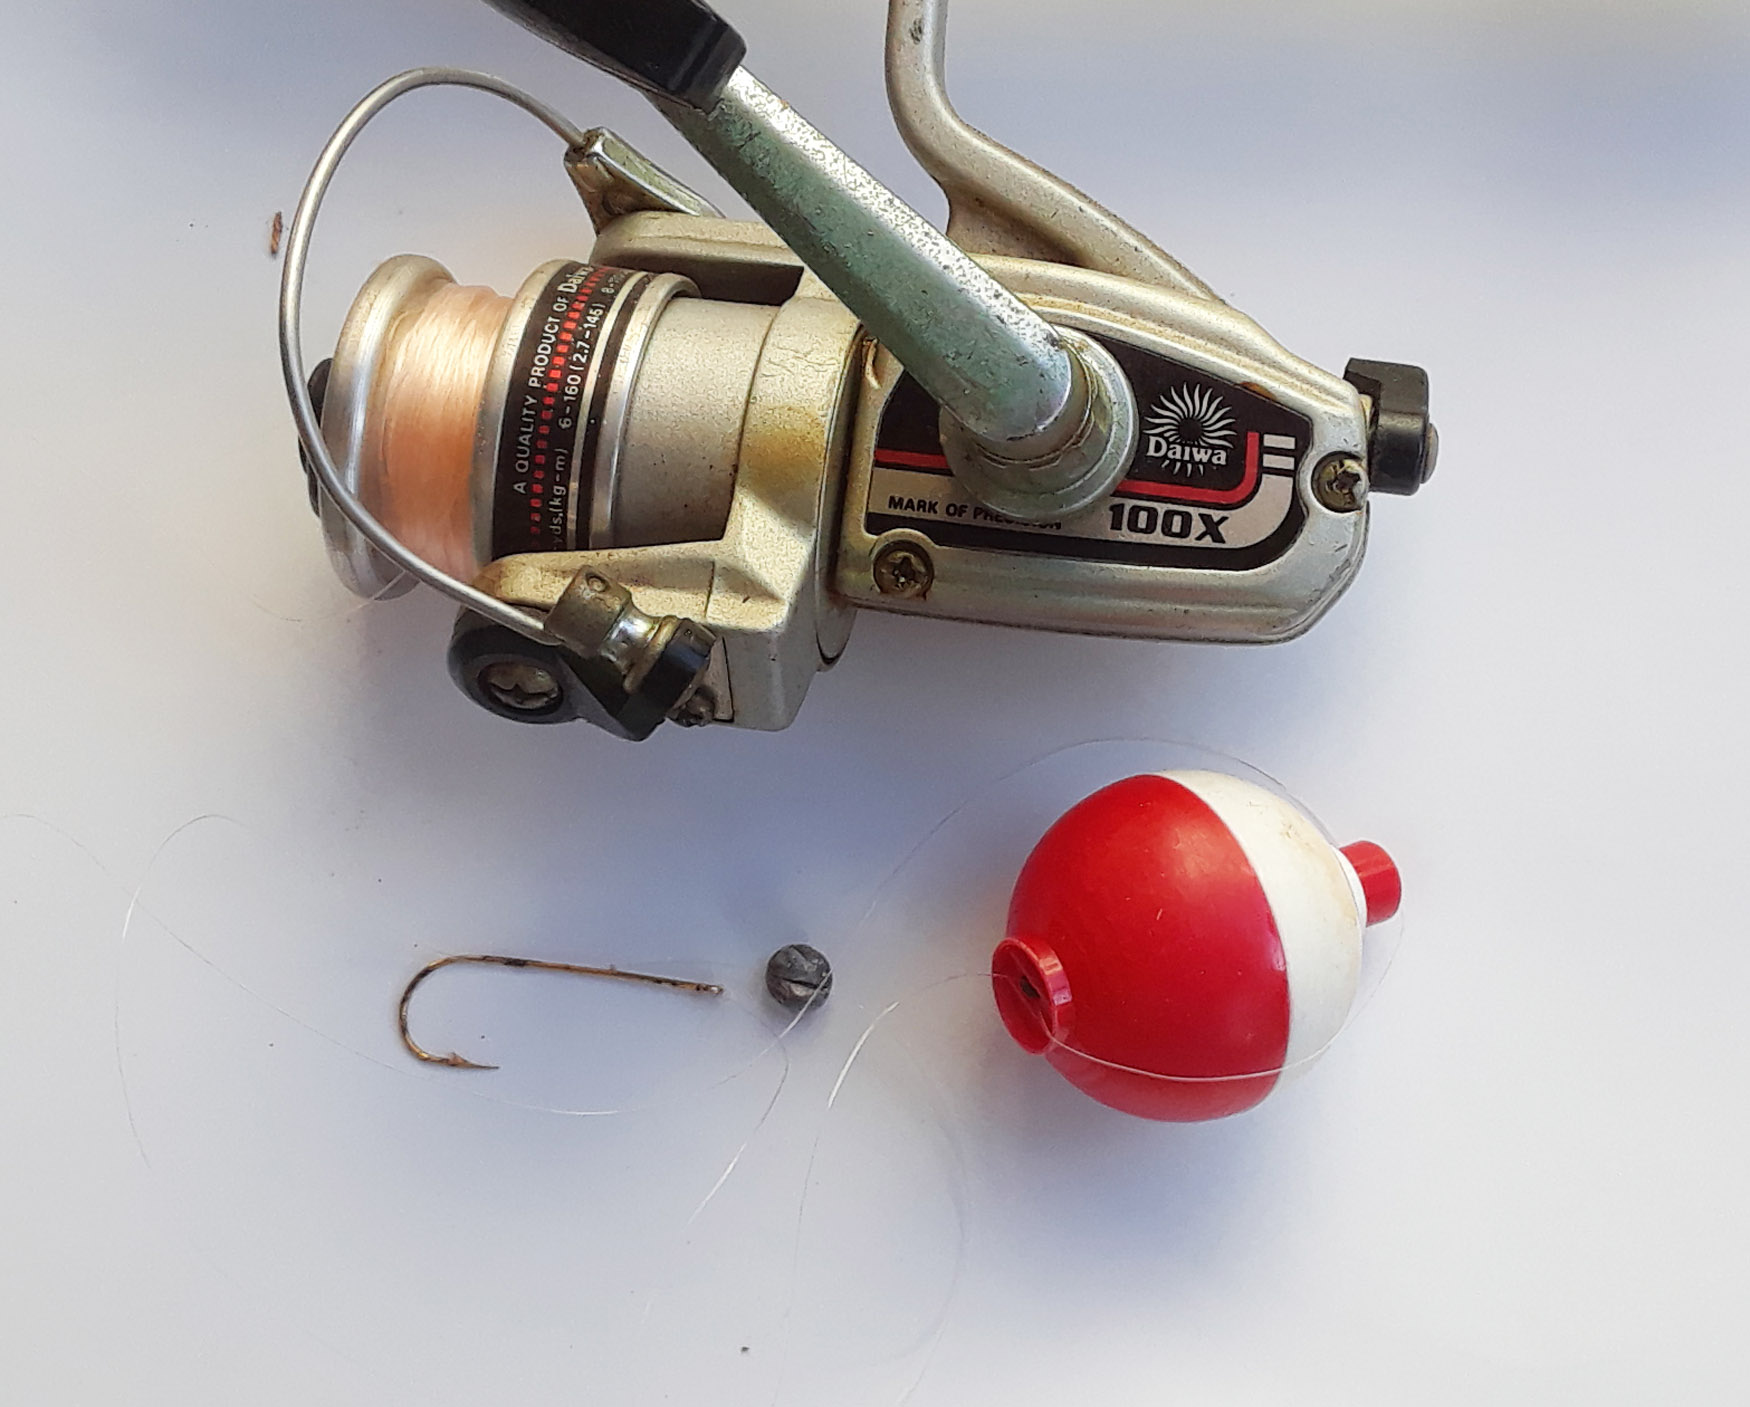 LeBlanc: Fishing with a simple rig